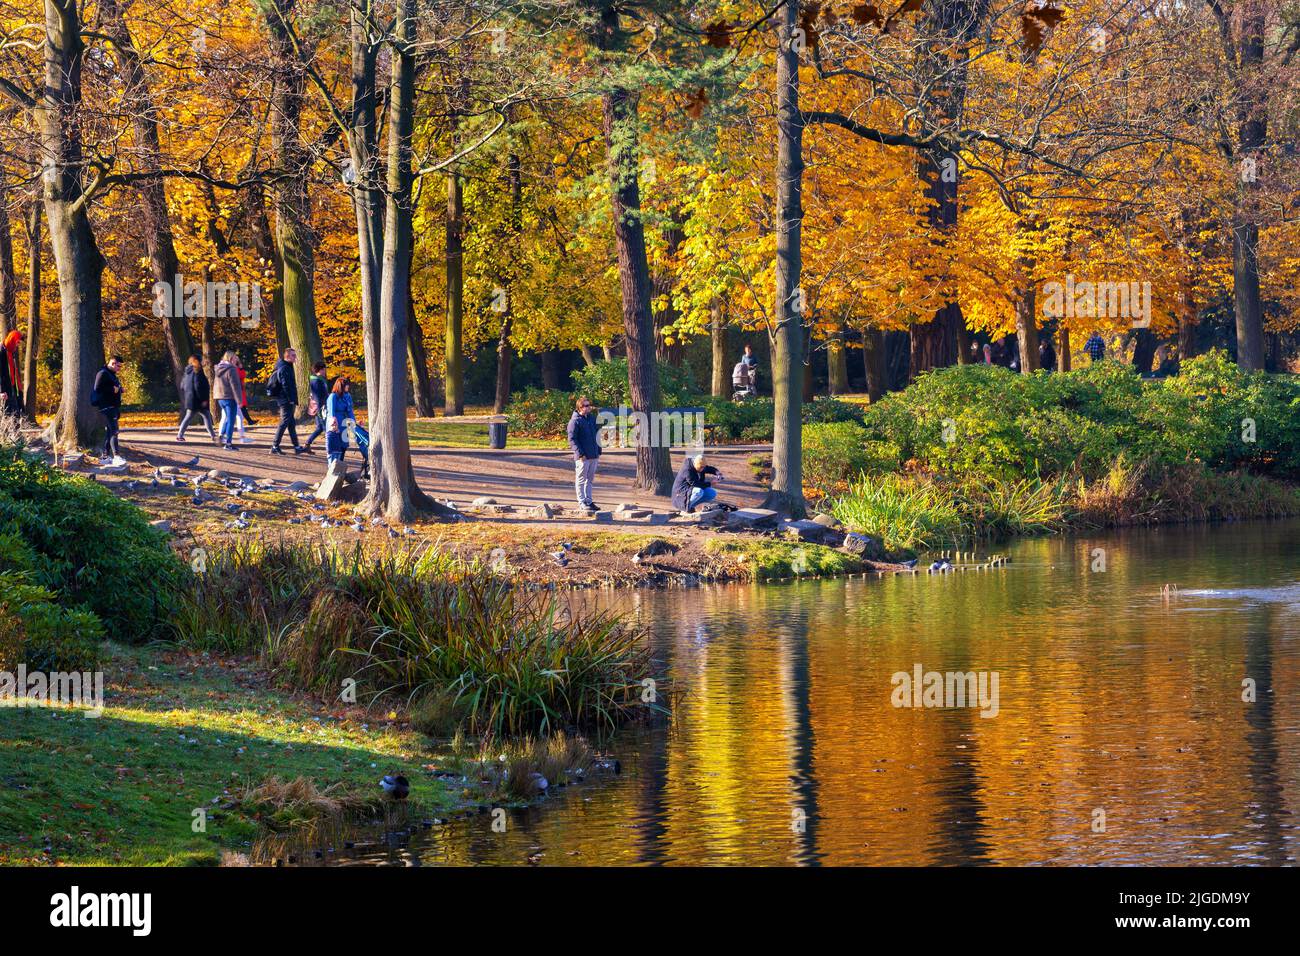 People in Royal Lazienki Park autumn scenery in Warsaw, Poland. Stock Photo